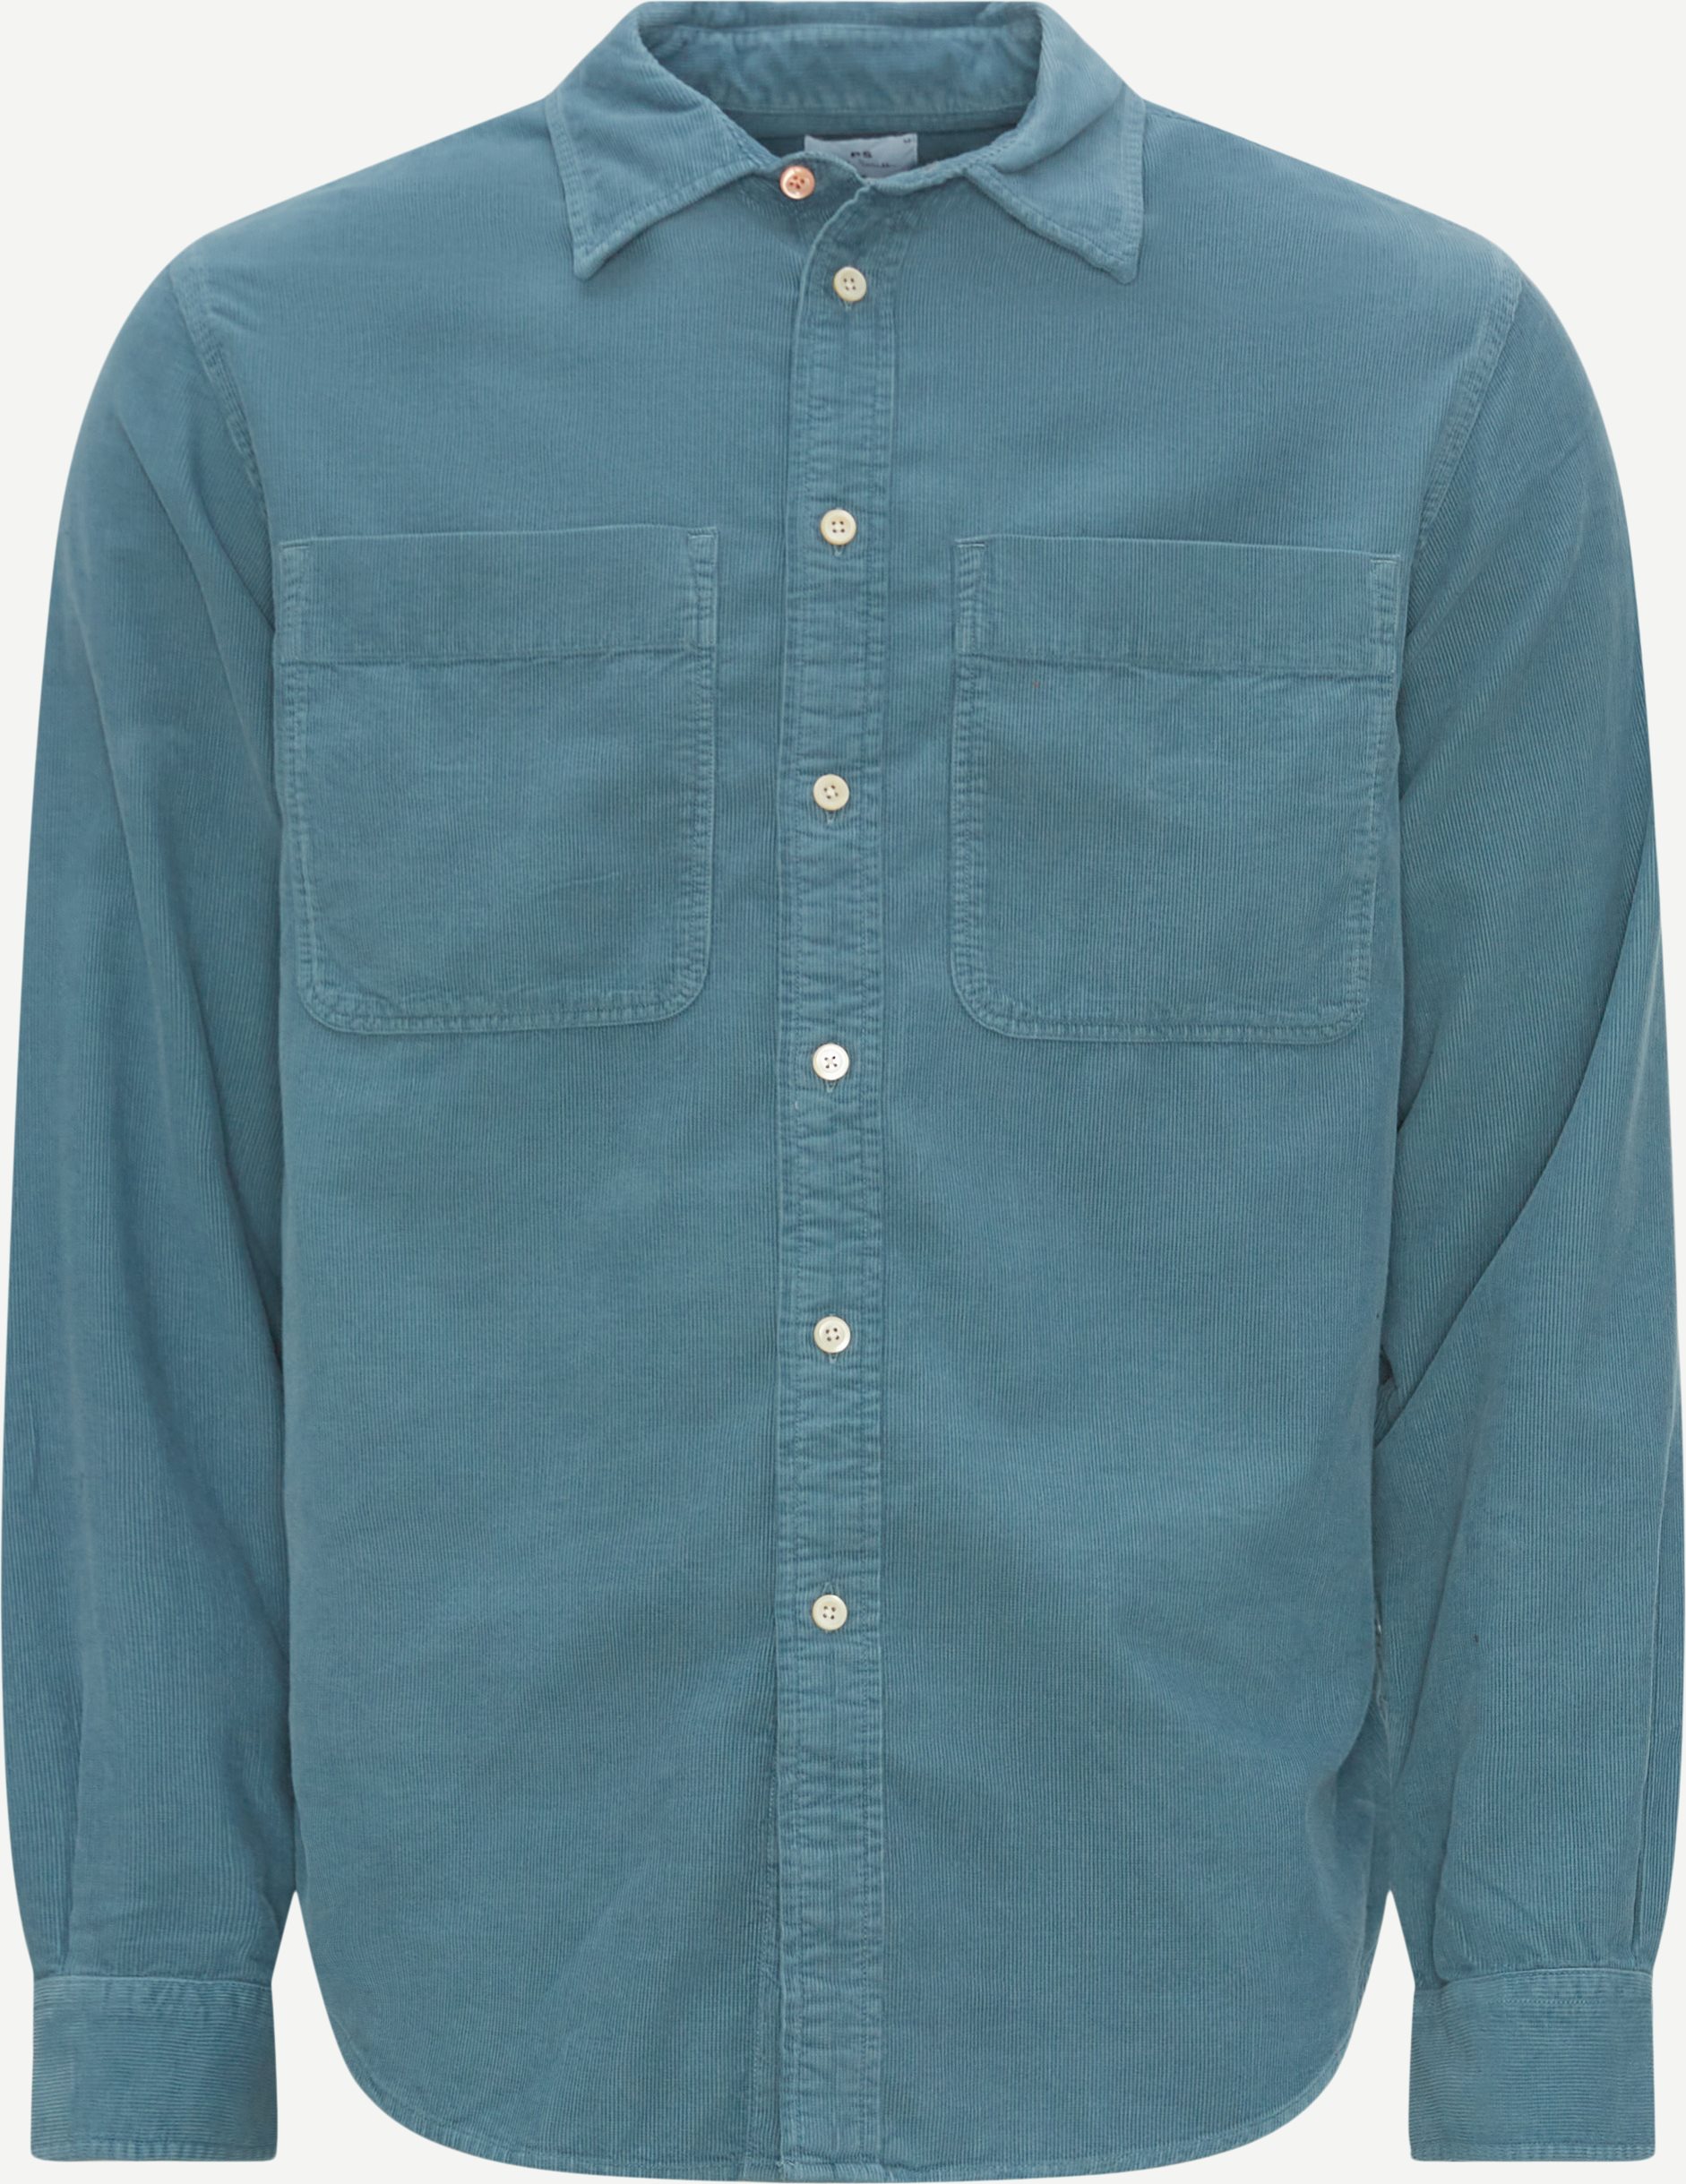 PS Paul Smith Shirts 450Y-L21879 MENS LS CASUAL FIT SHIRT Blue